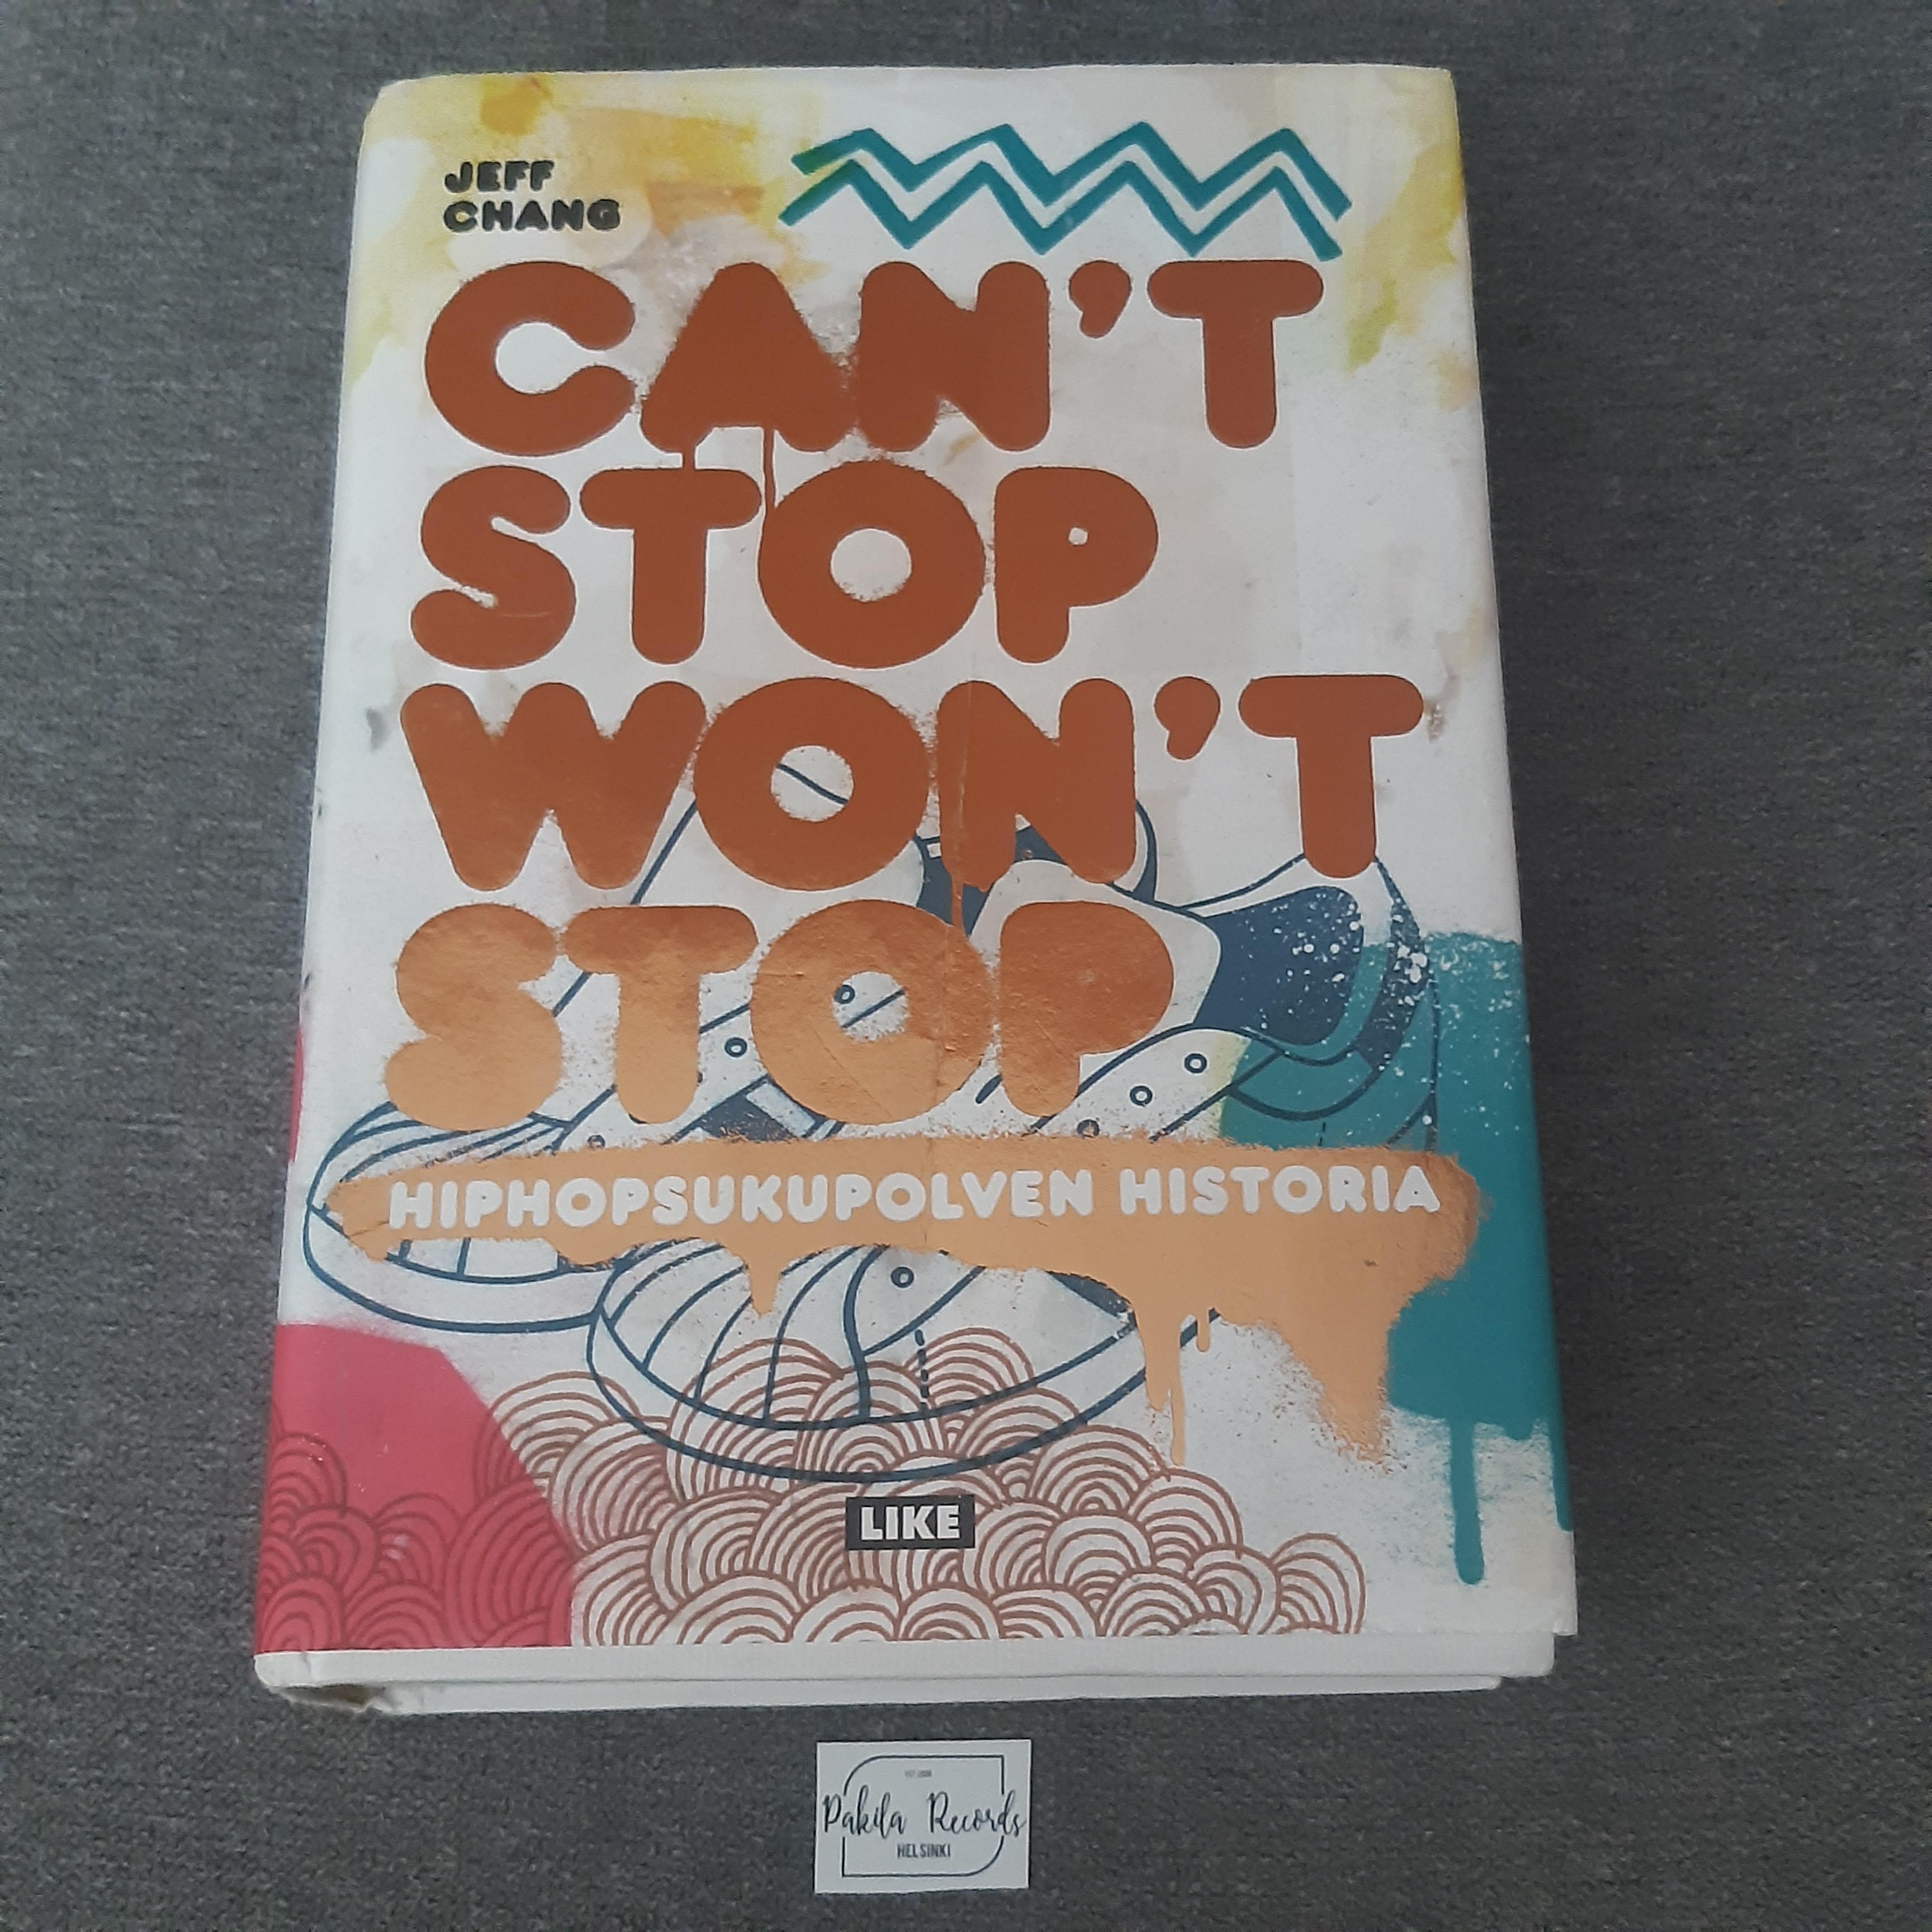 Can't Stop Won't Stop, Hiphopsukupolven historia - Jeff Chang - Kirja (käytetty)